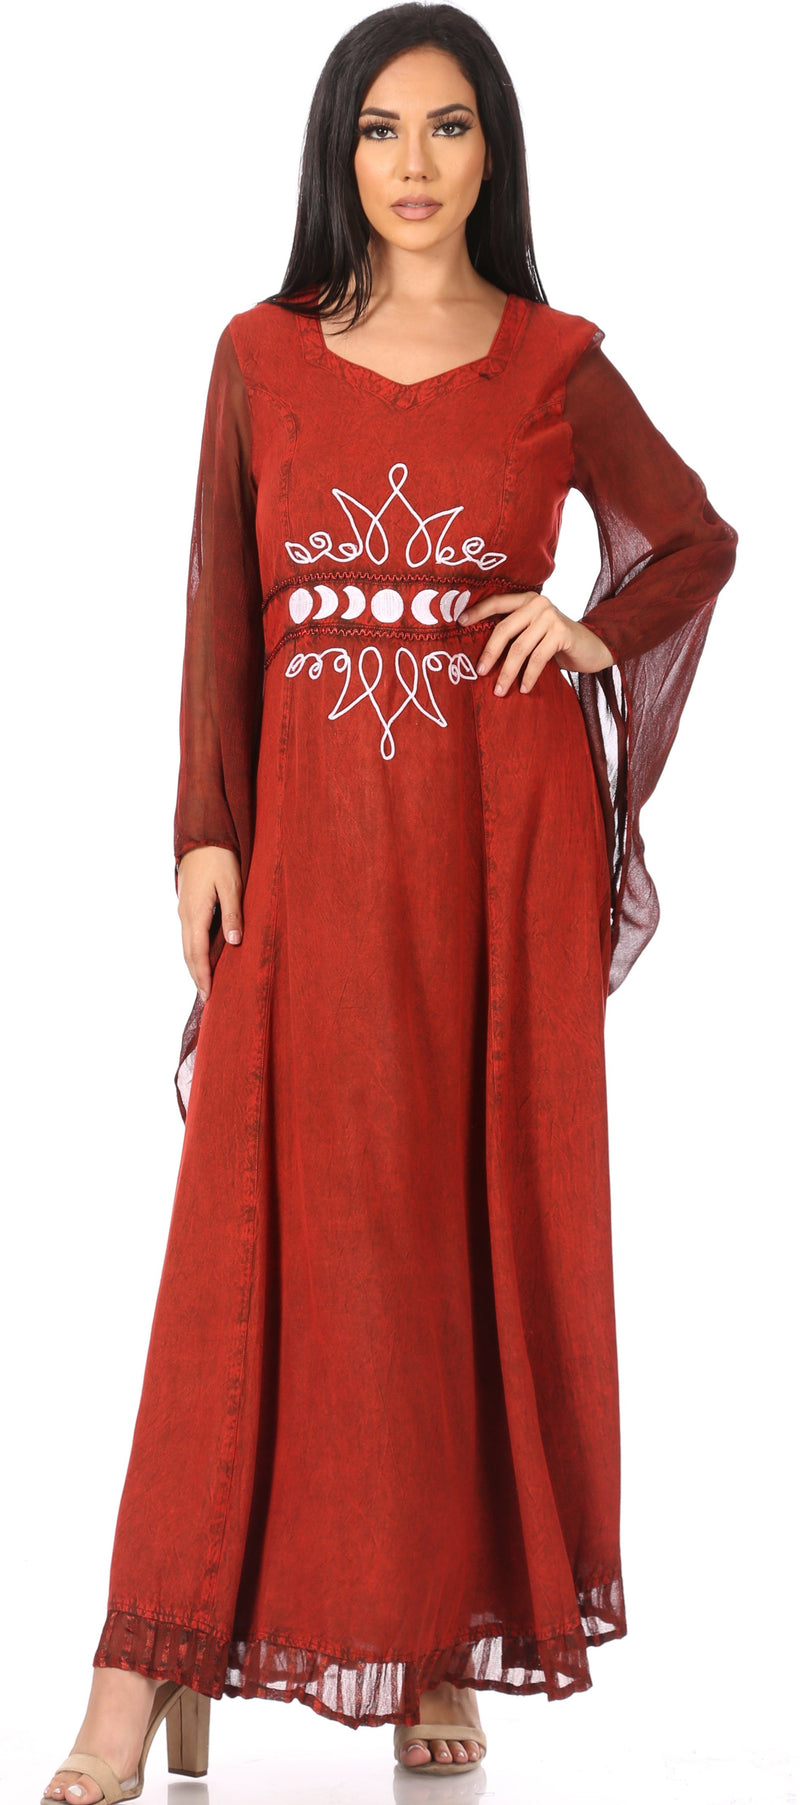 Sakkas Eve Women's Long Sleeve Casual Medieval Renaissance Celtic Maxi Dress Soft